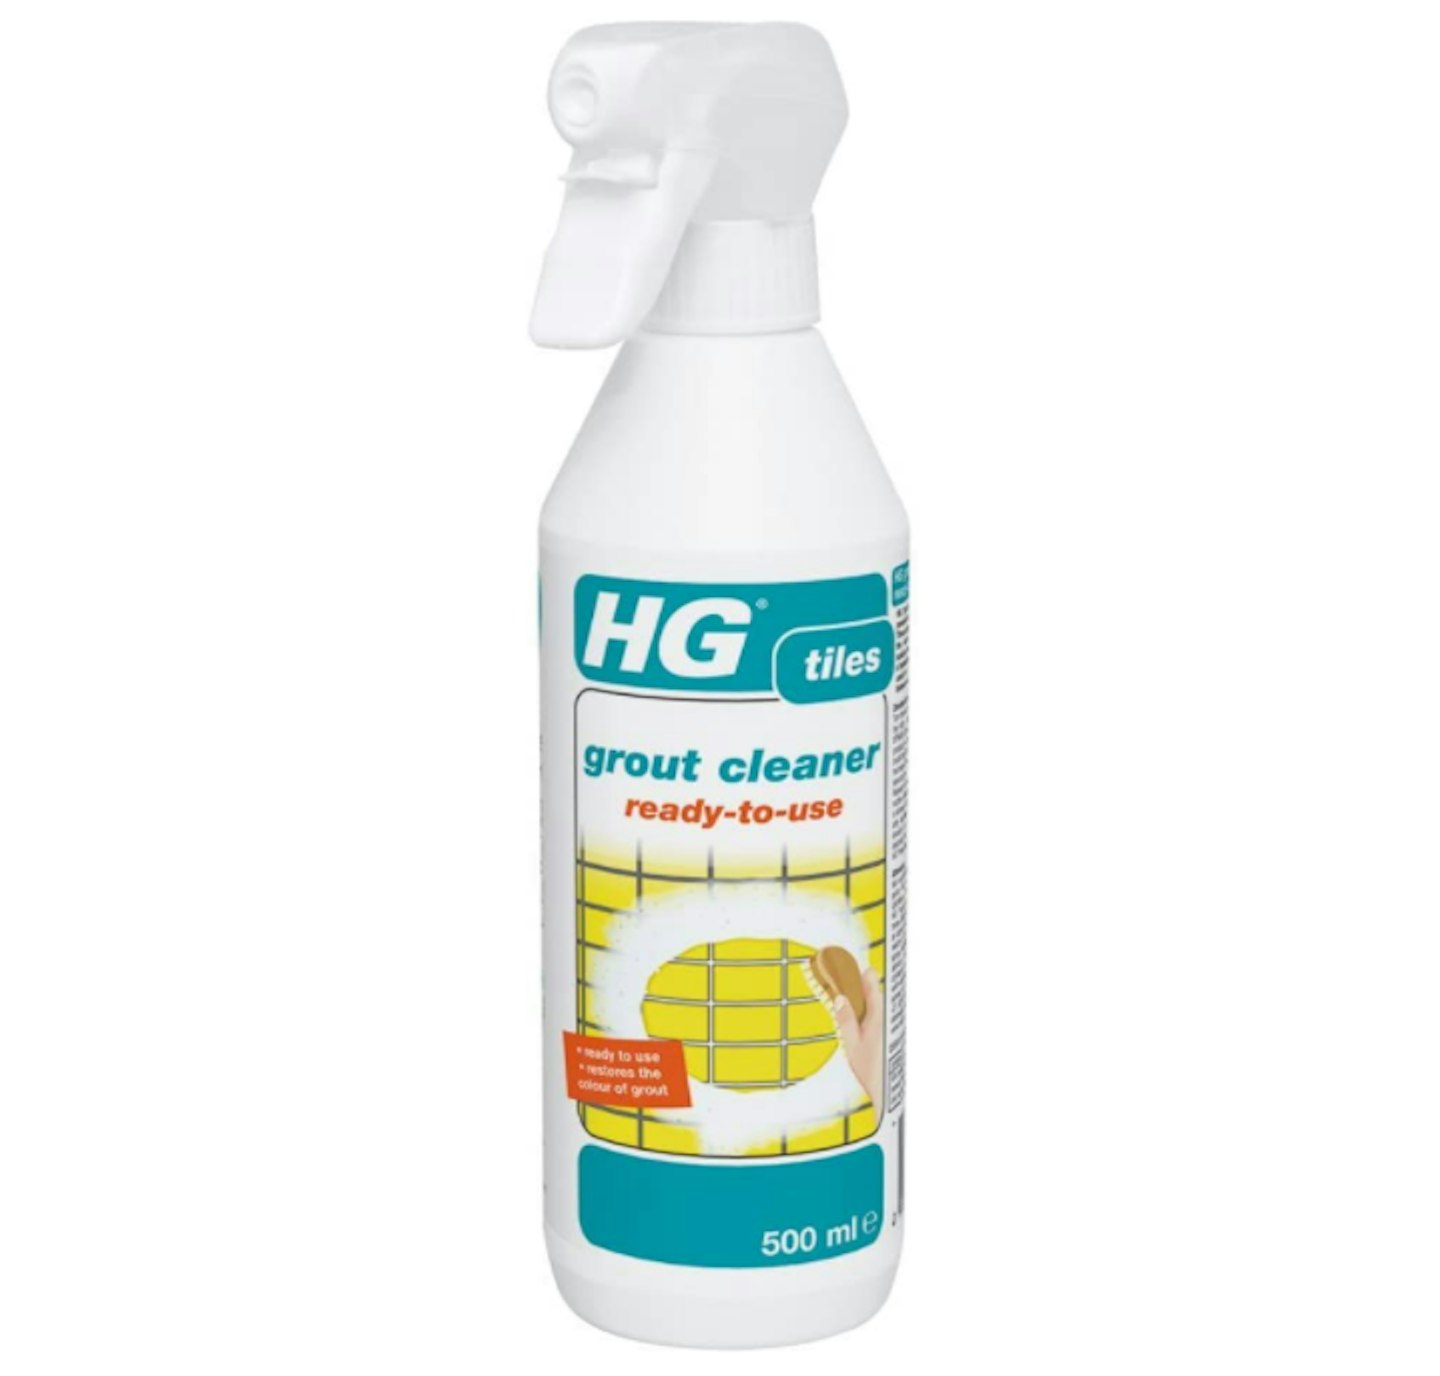 HG Tiles Grout Cleaner 500ml